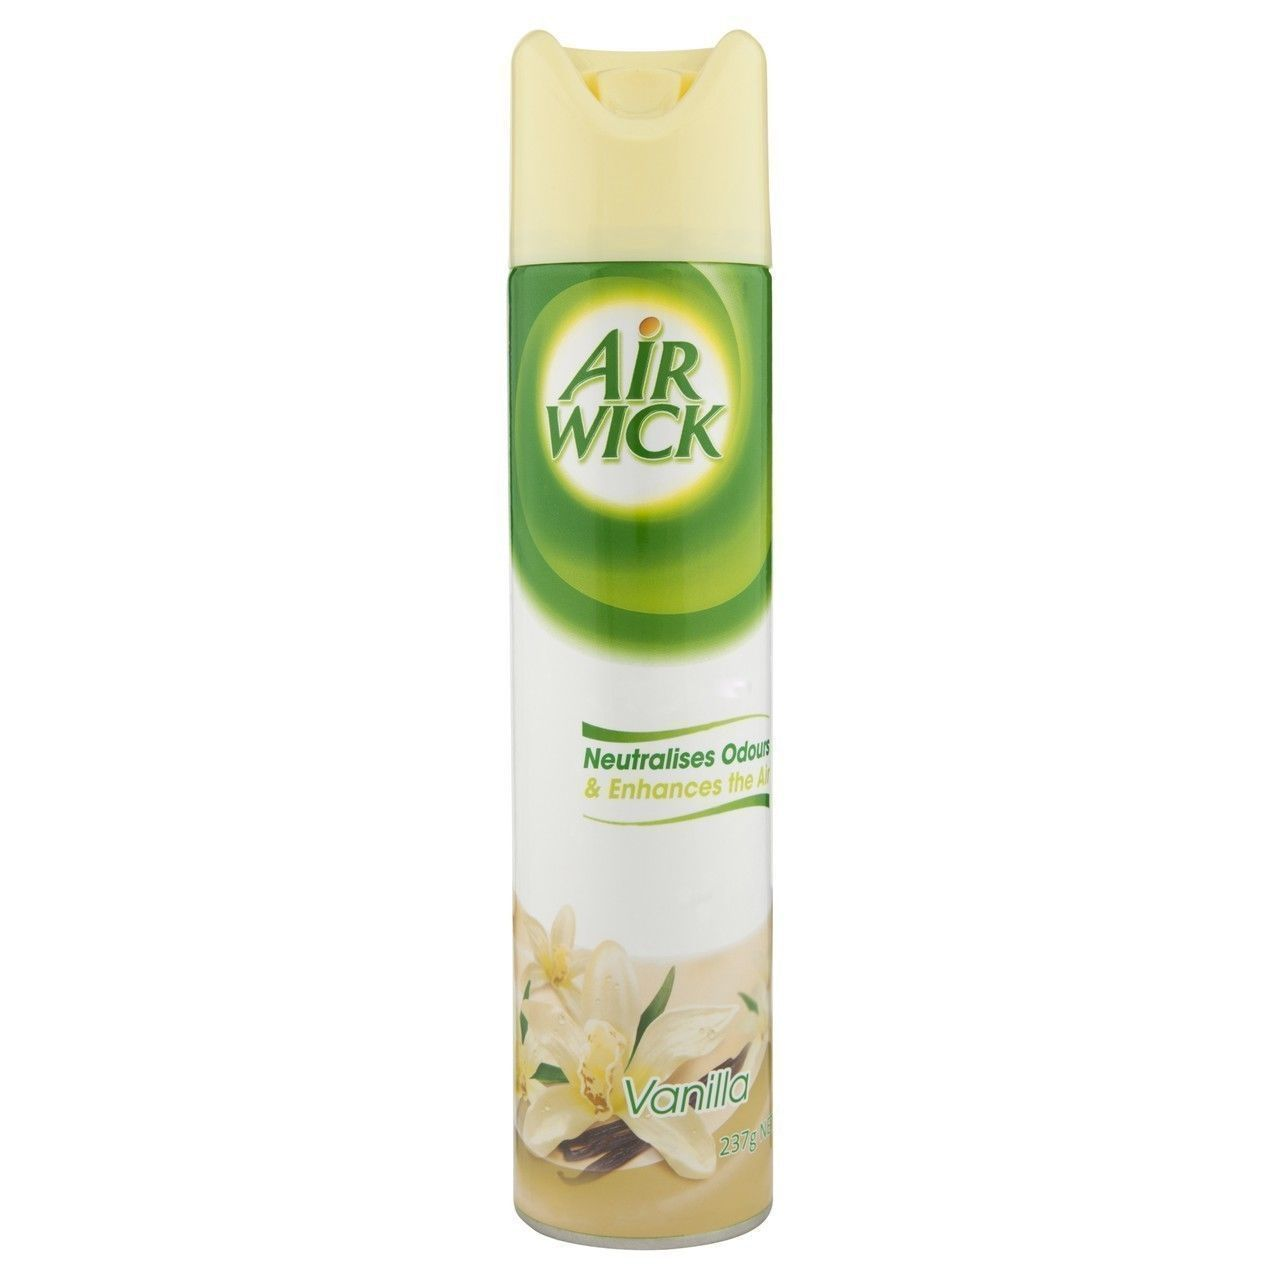 Air Wick Air Freshener Vanilla 237g